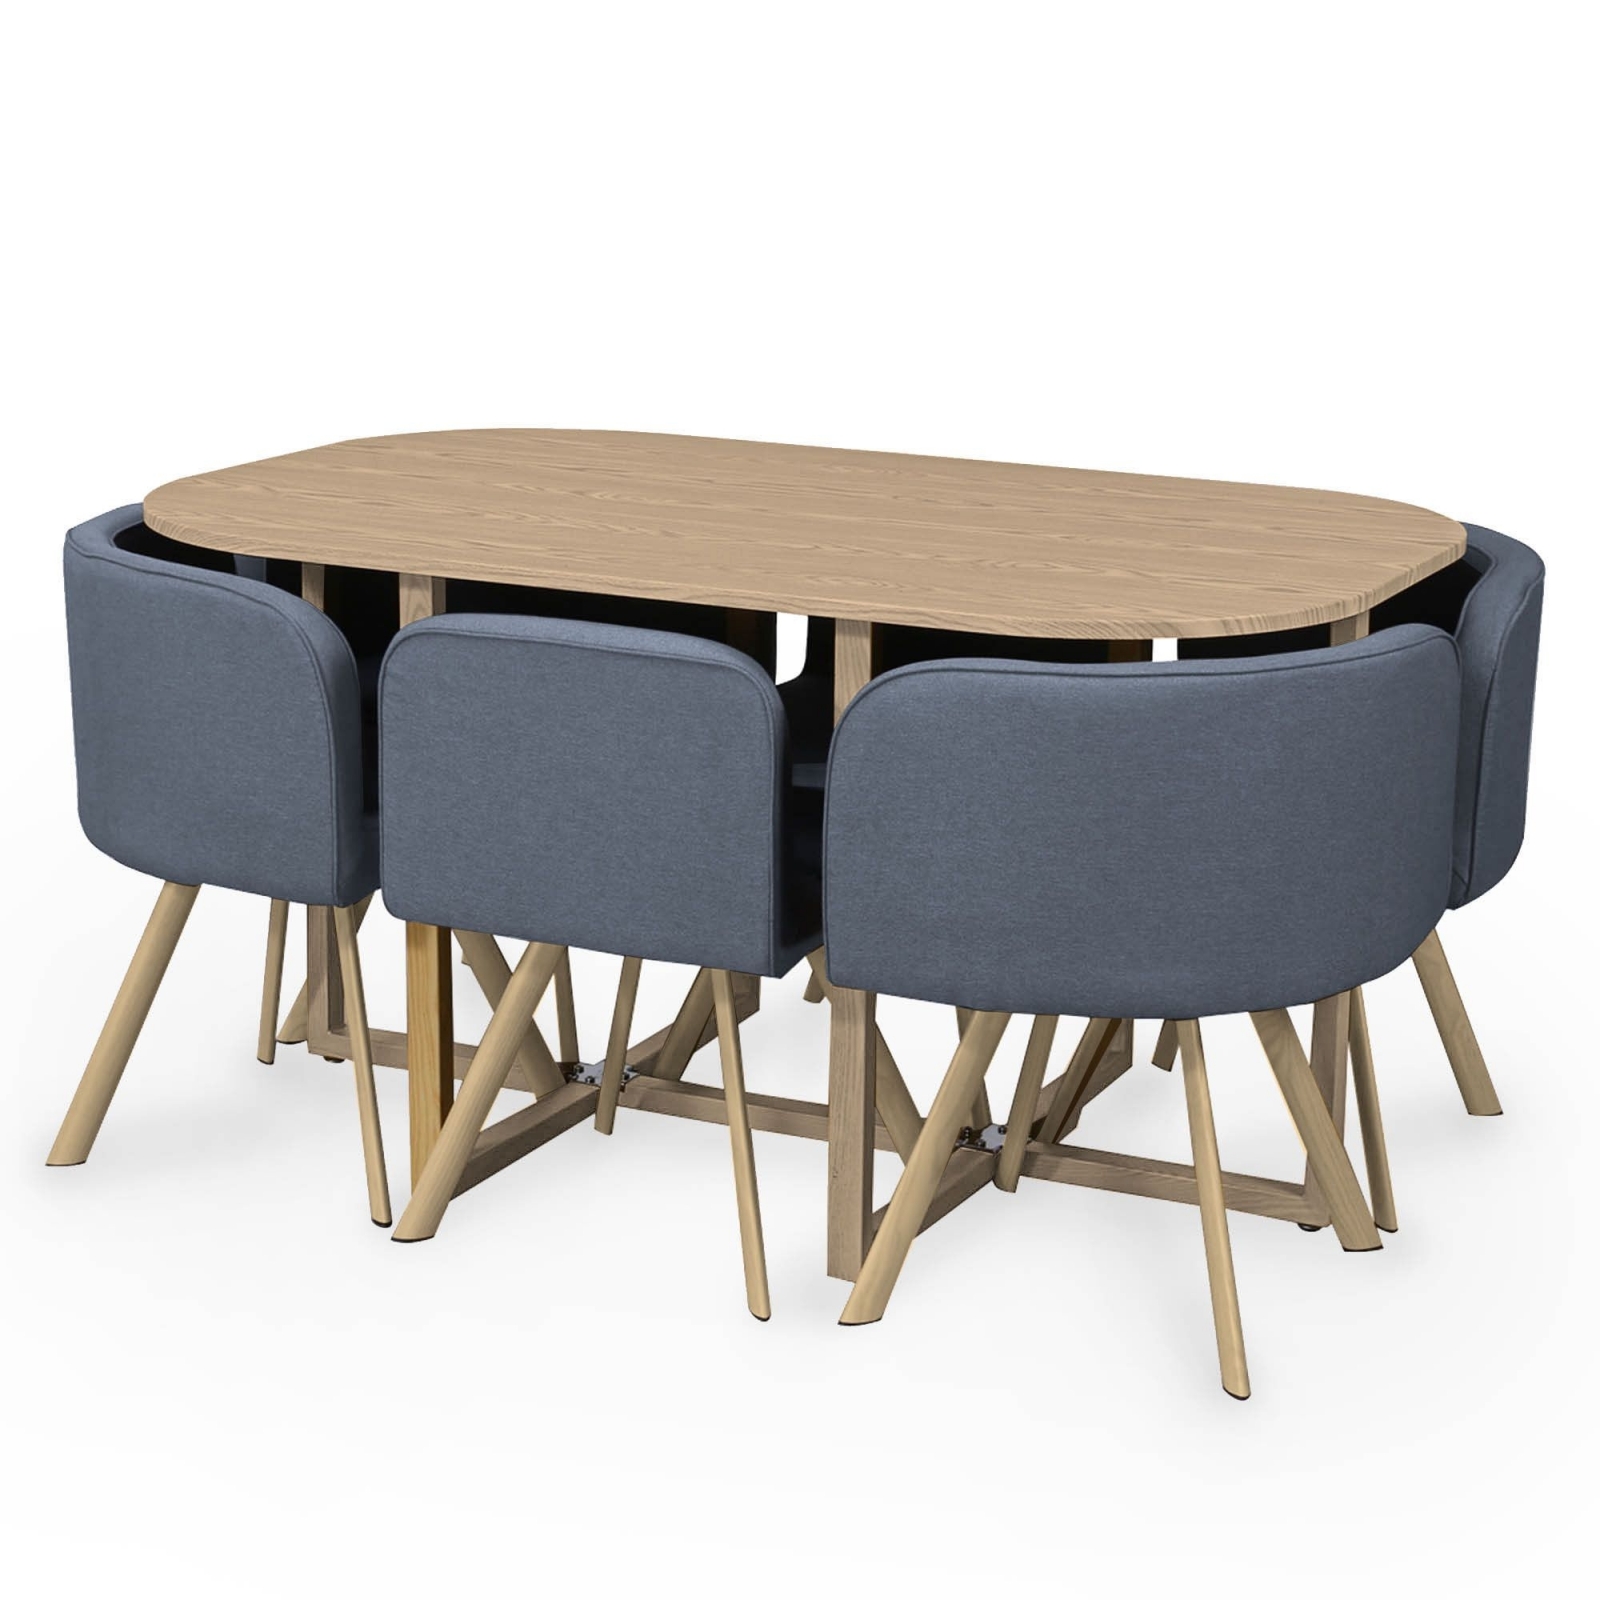 Ensemble Table avec 6 Chaises - Mobilier moderne et design Kit-M